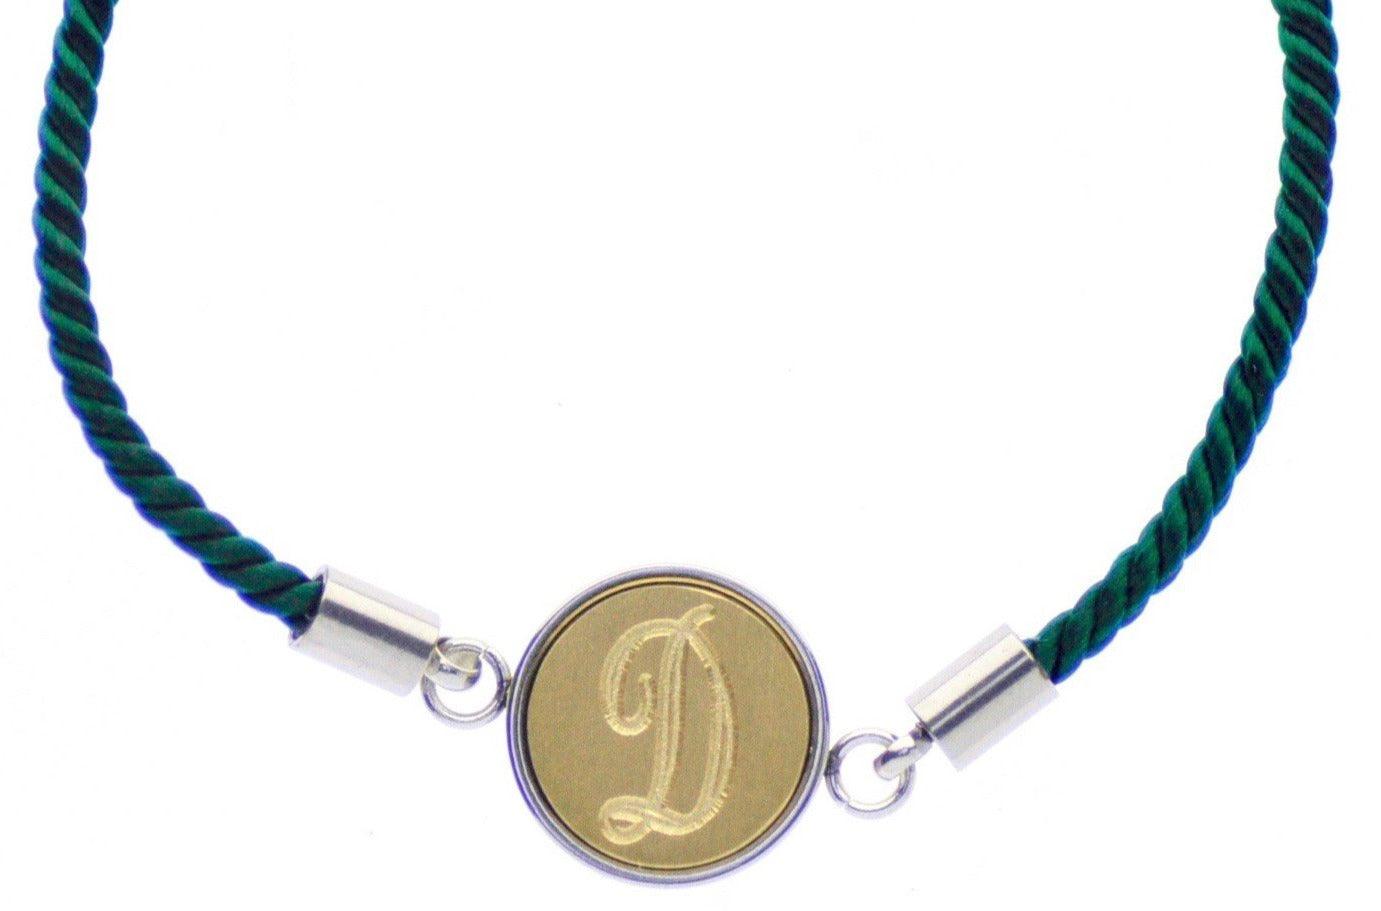 Line Initial Signet Bracelet - Backtozero B20 - 1 initial, 10mm, 12mm, 1initial, adjustable, bracelet, brass, cord, cord bracelet, Custom, green, minimal, One Initial, Personalized, royal blue, signet, signet bracelet, stainless steel, twist cord